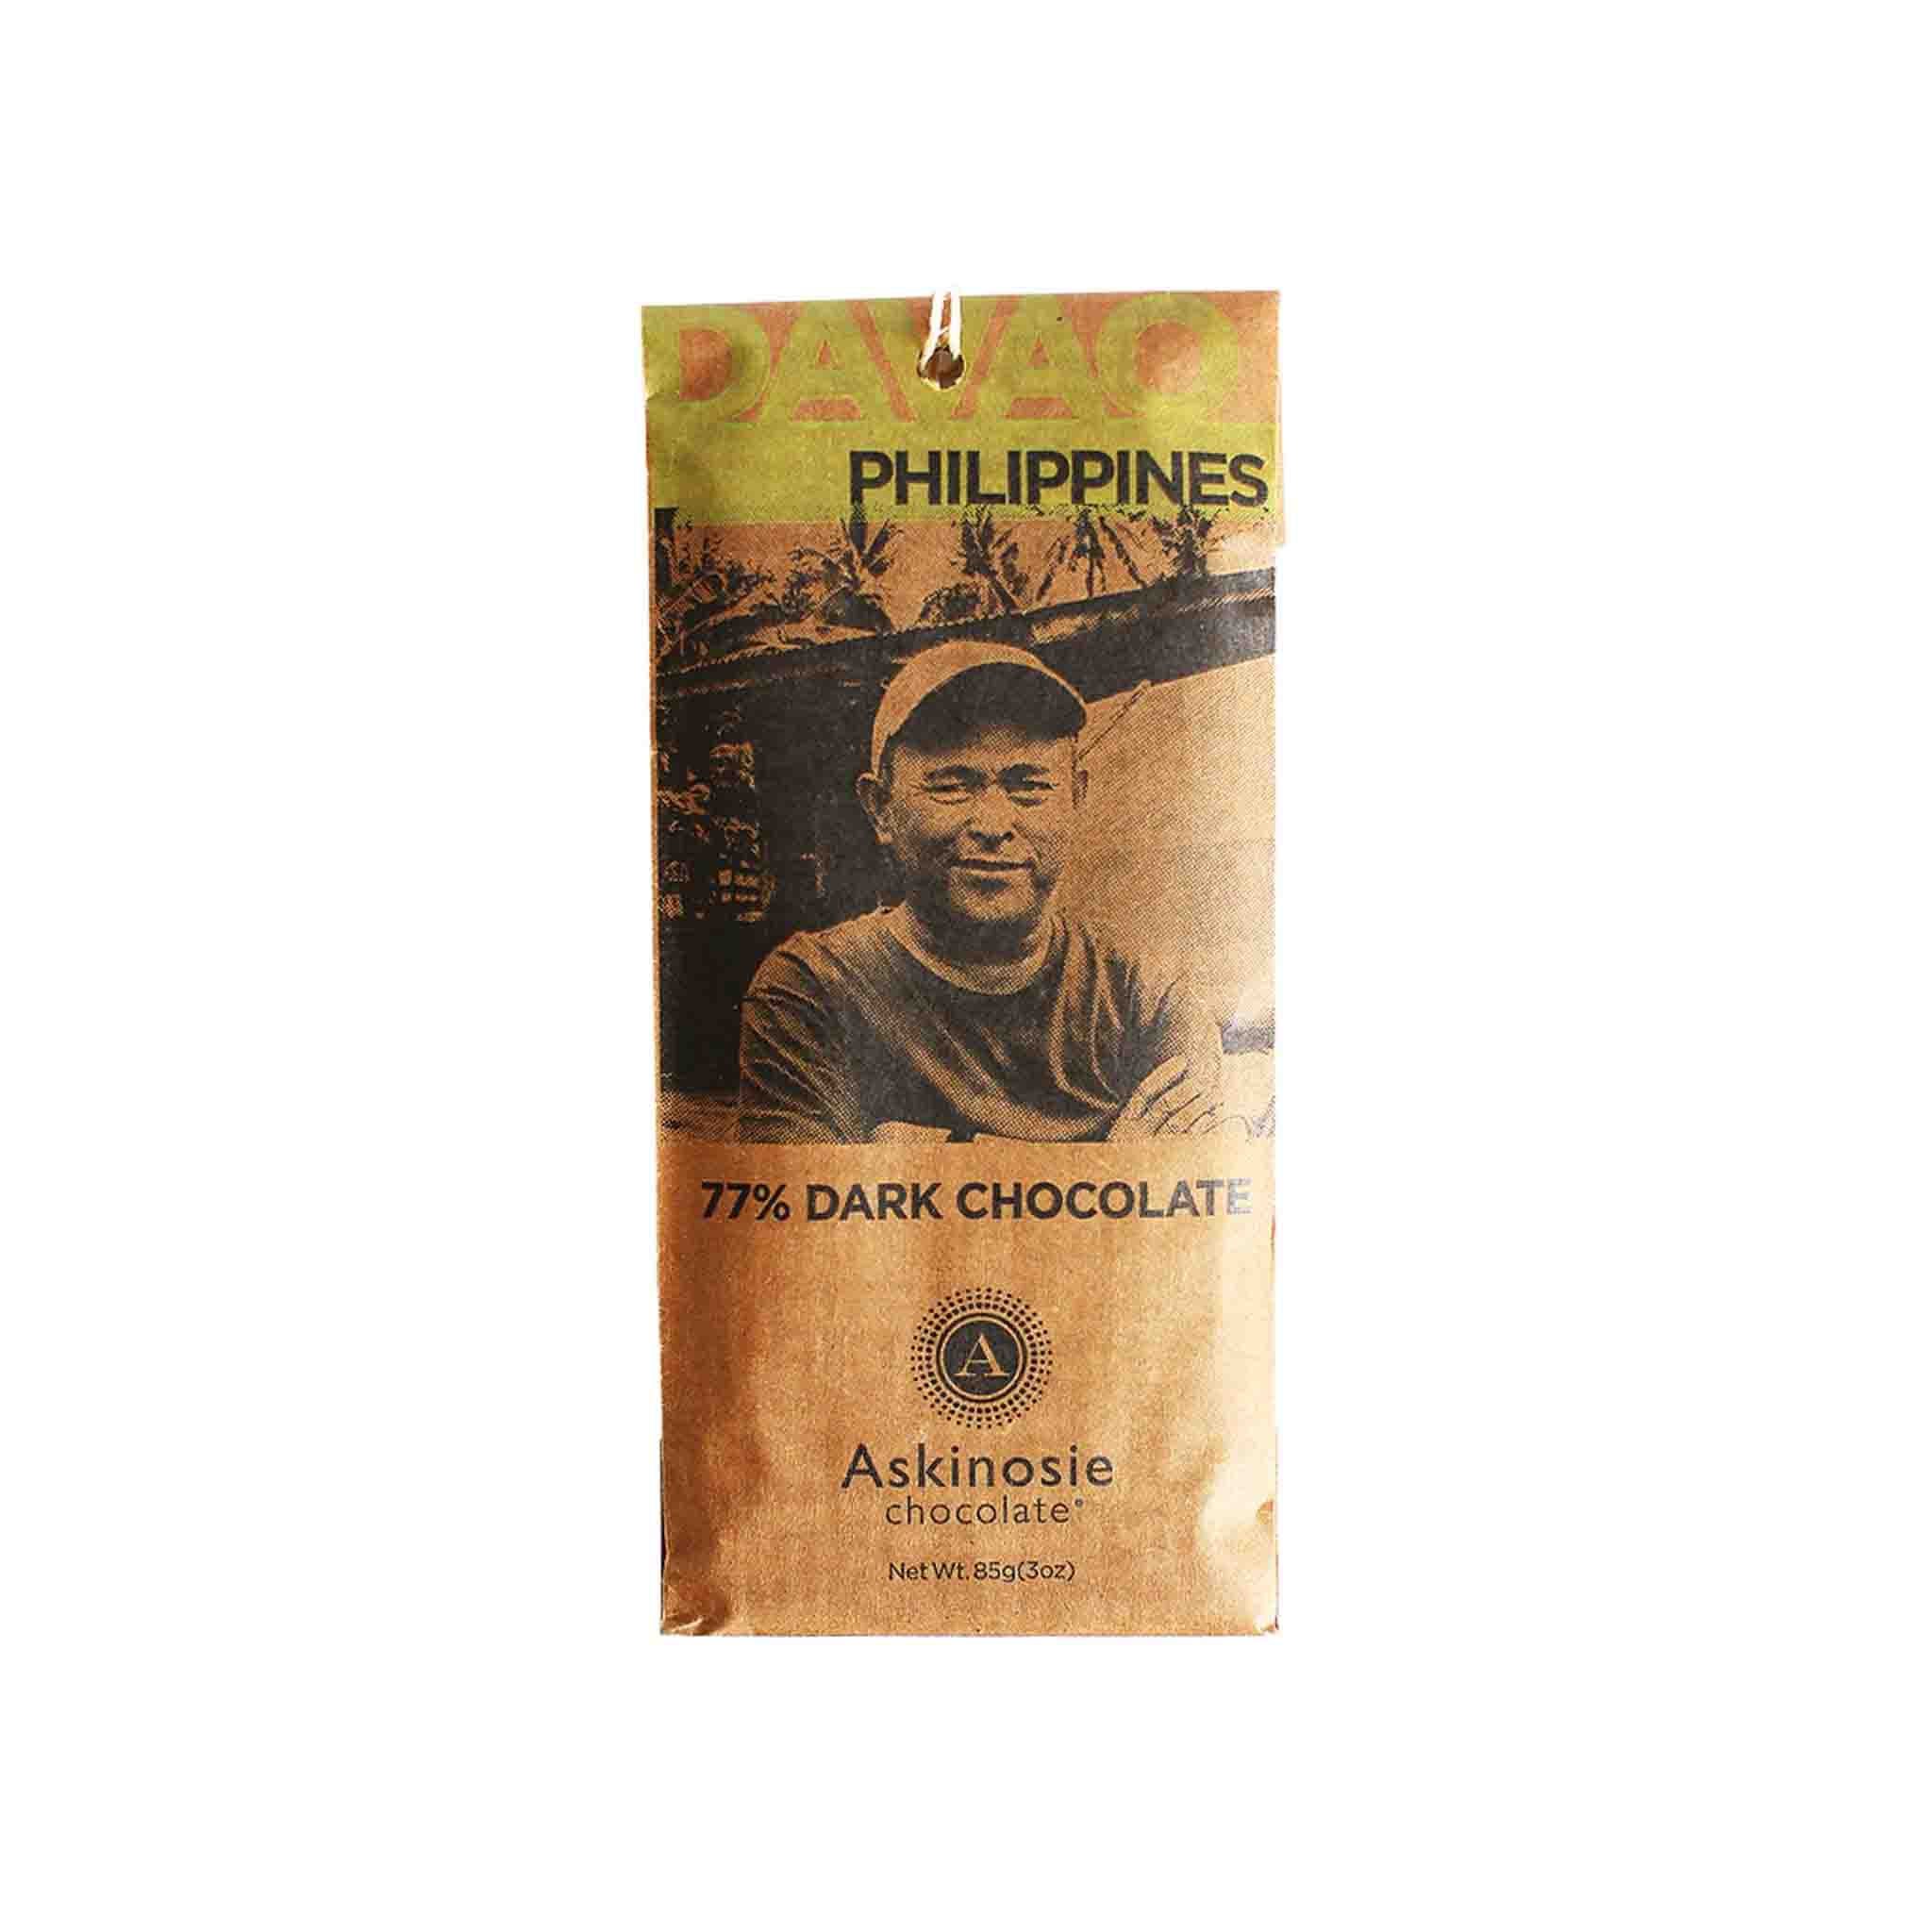 ASKINOSIE PHILIPPINES DARK 77% CHOCOLATE 85g